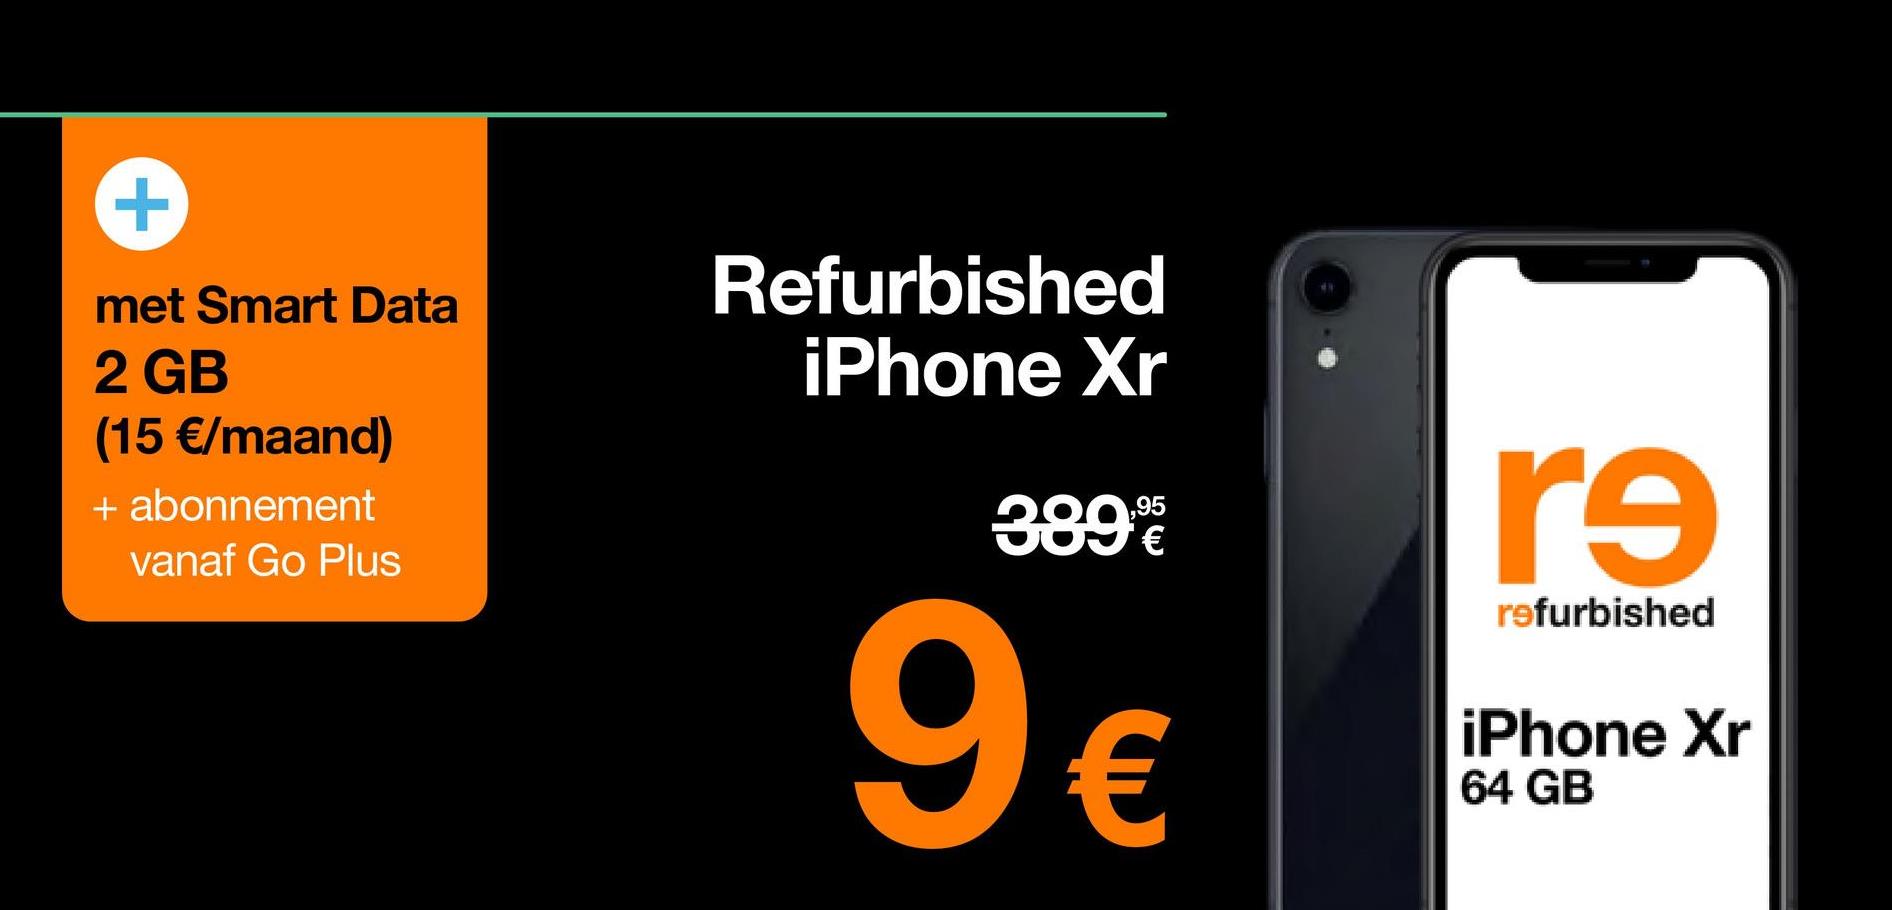 +
met Smart Data
2 GB
(15 €/maand)
+ abonnement
vanaf Go Plus
Refurbished
iPhone Xr
389%
9€
re
refurbished
iPhone Xr
64 GB